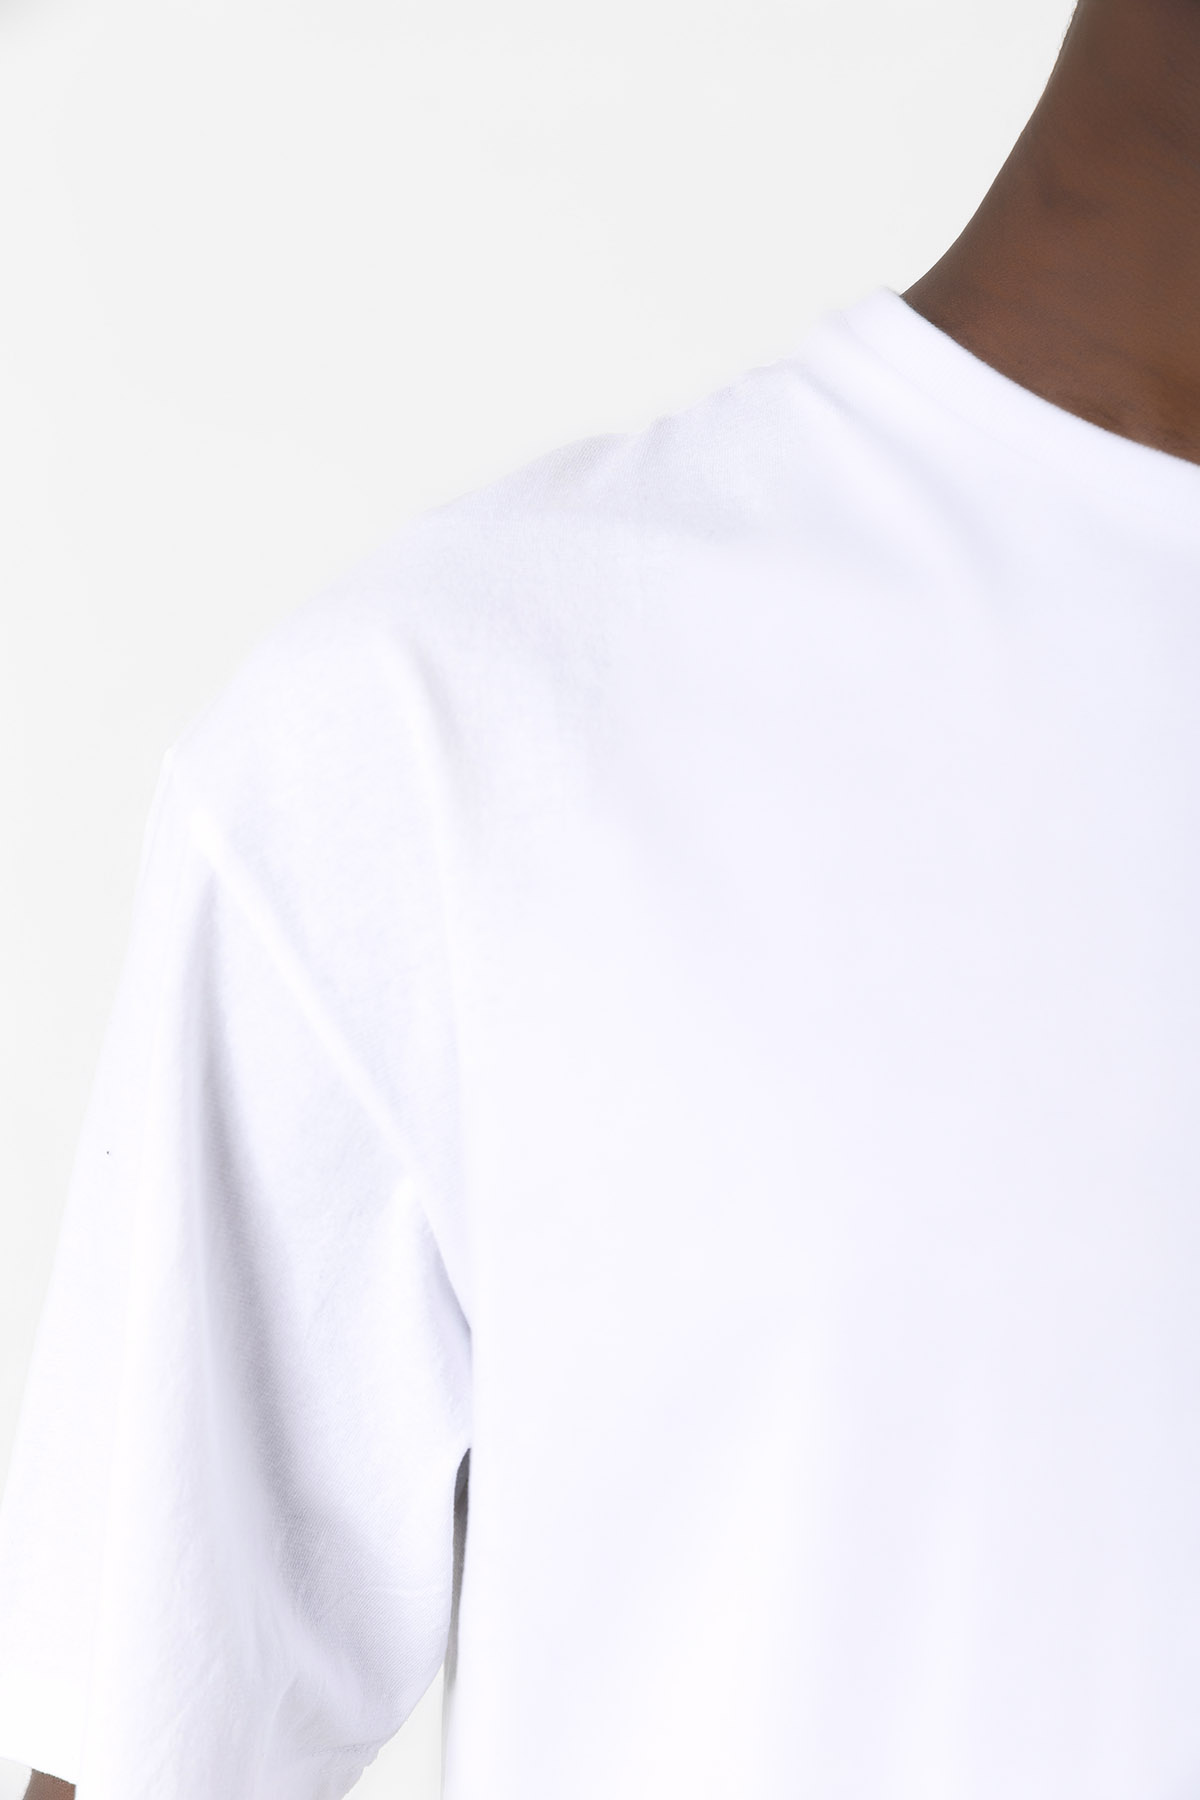 Casablanca Insıde A Barcode Beyaz Erkek Oversize Tshirt